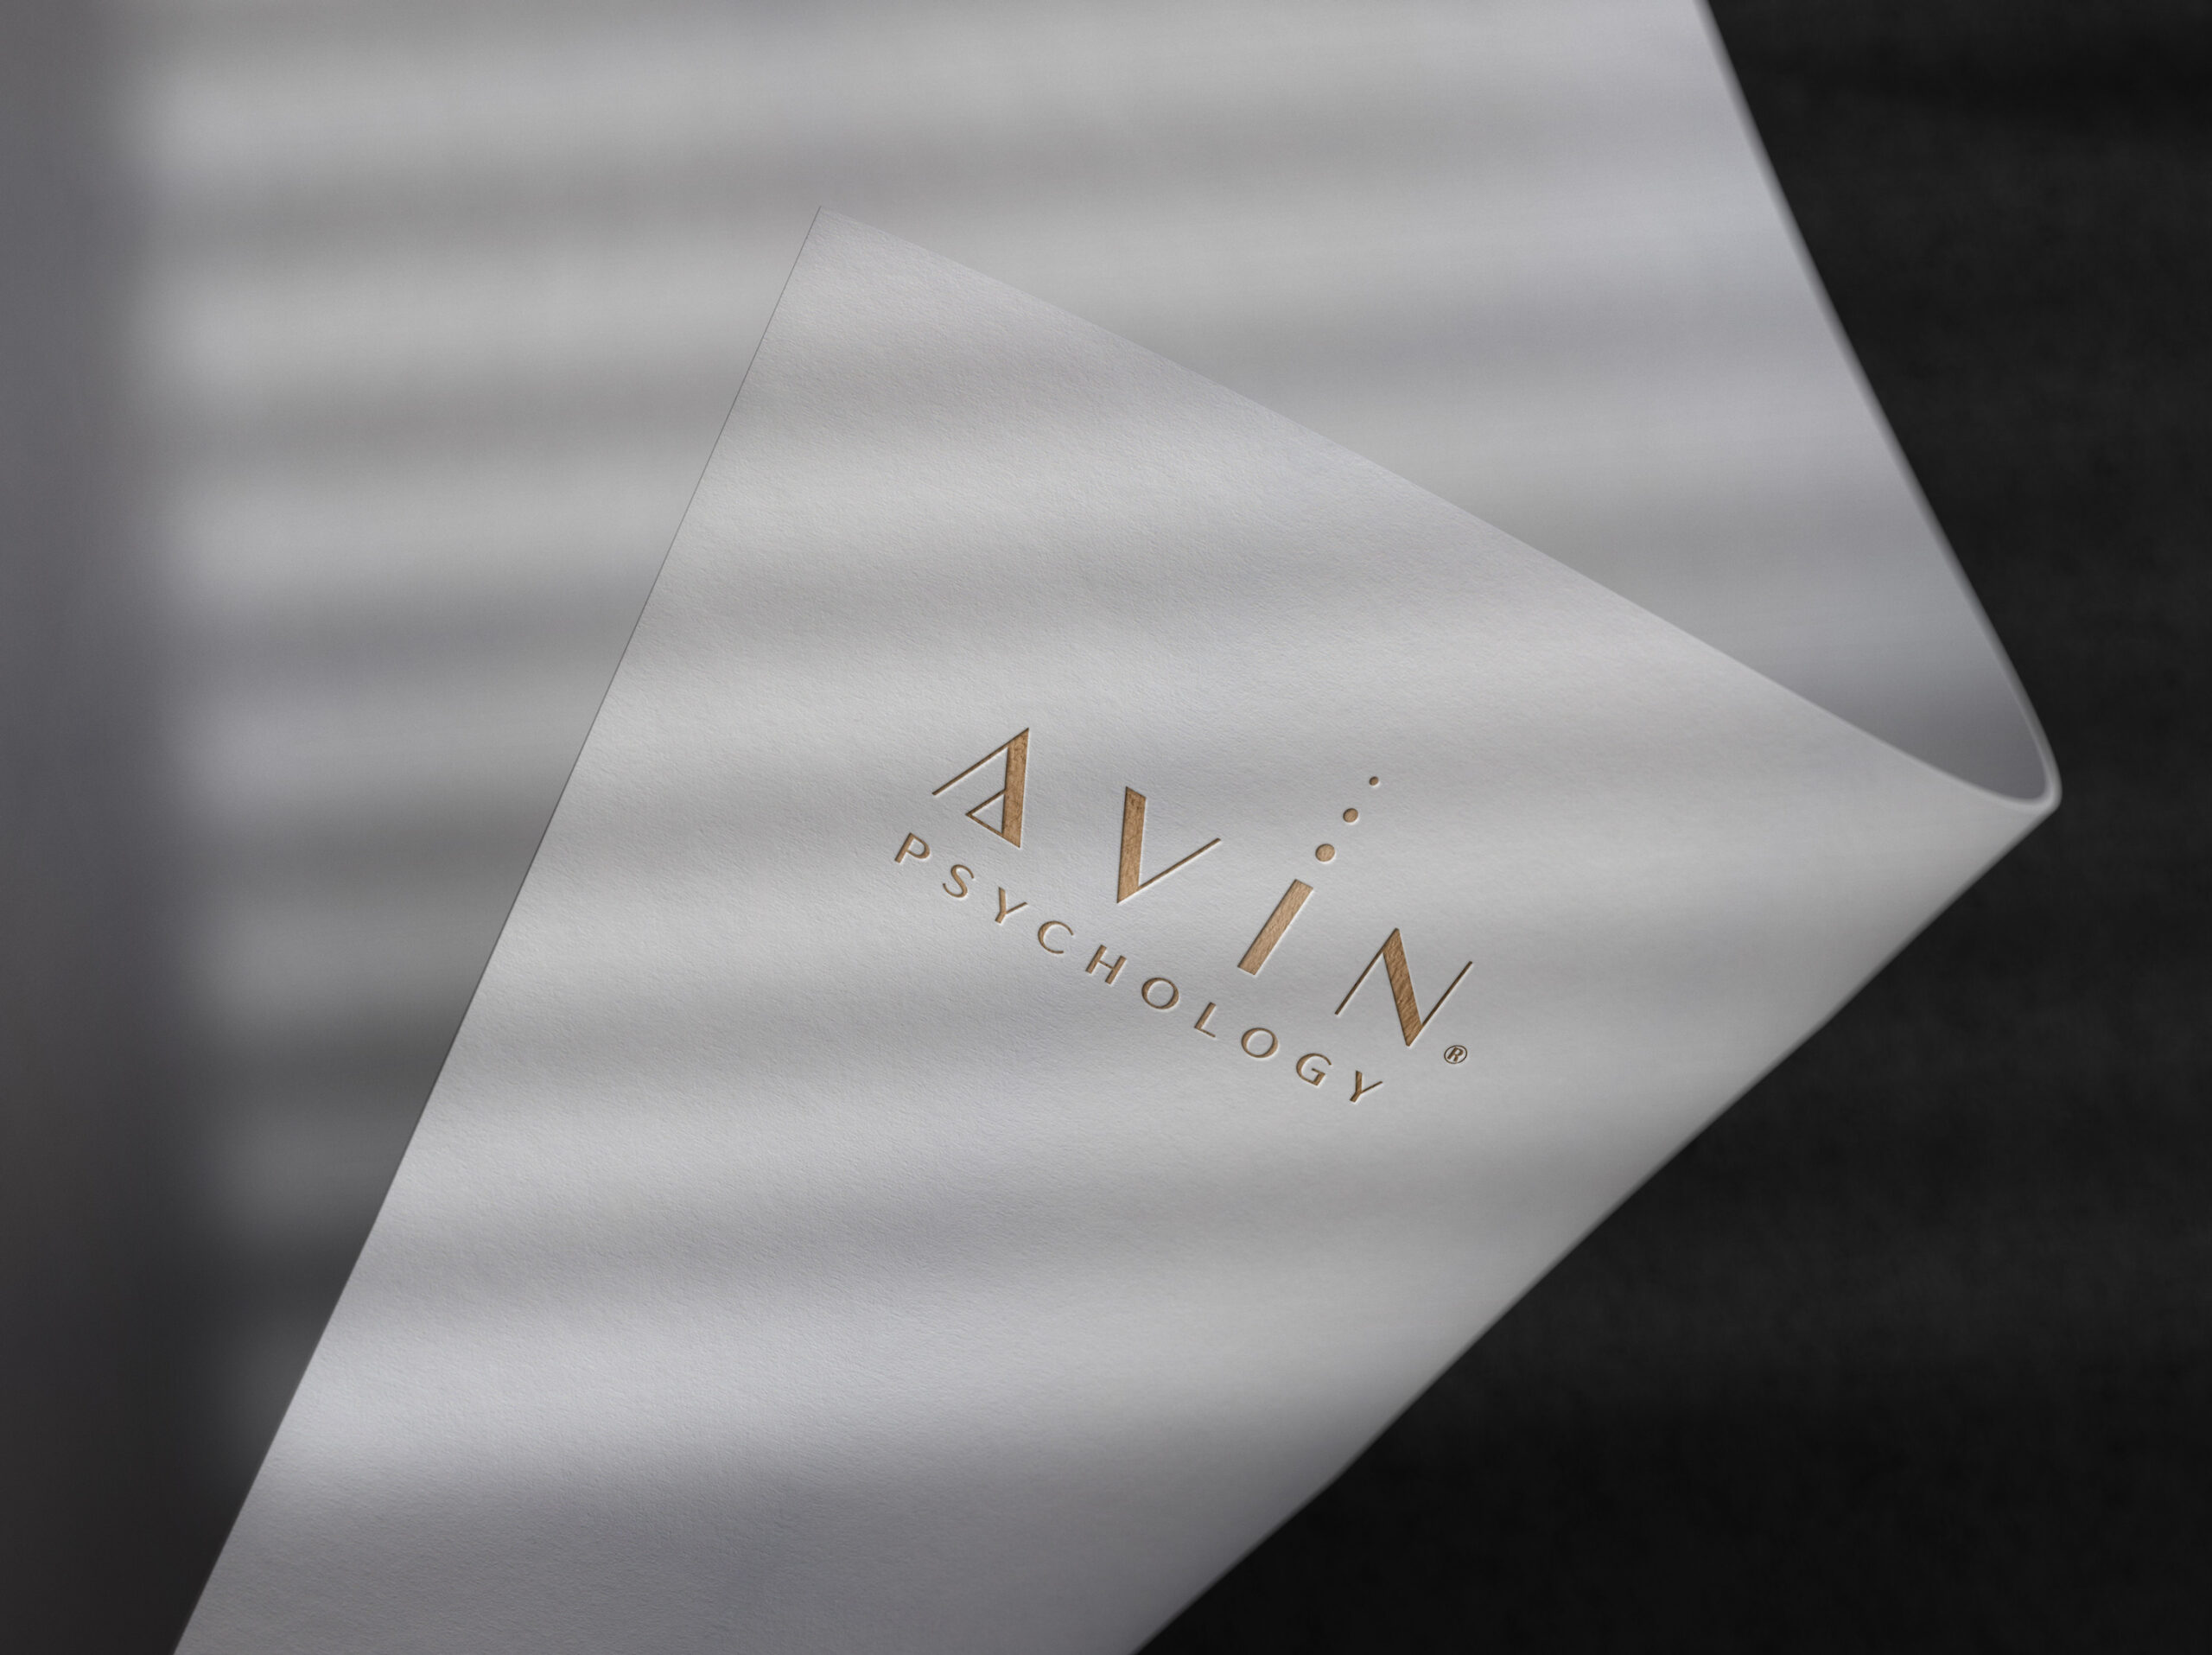 Avin Psychology Branding & Website Design Development by TL Design Co.